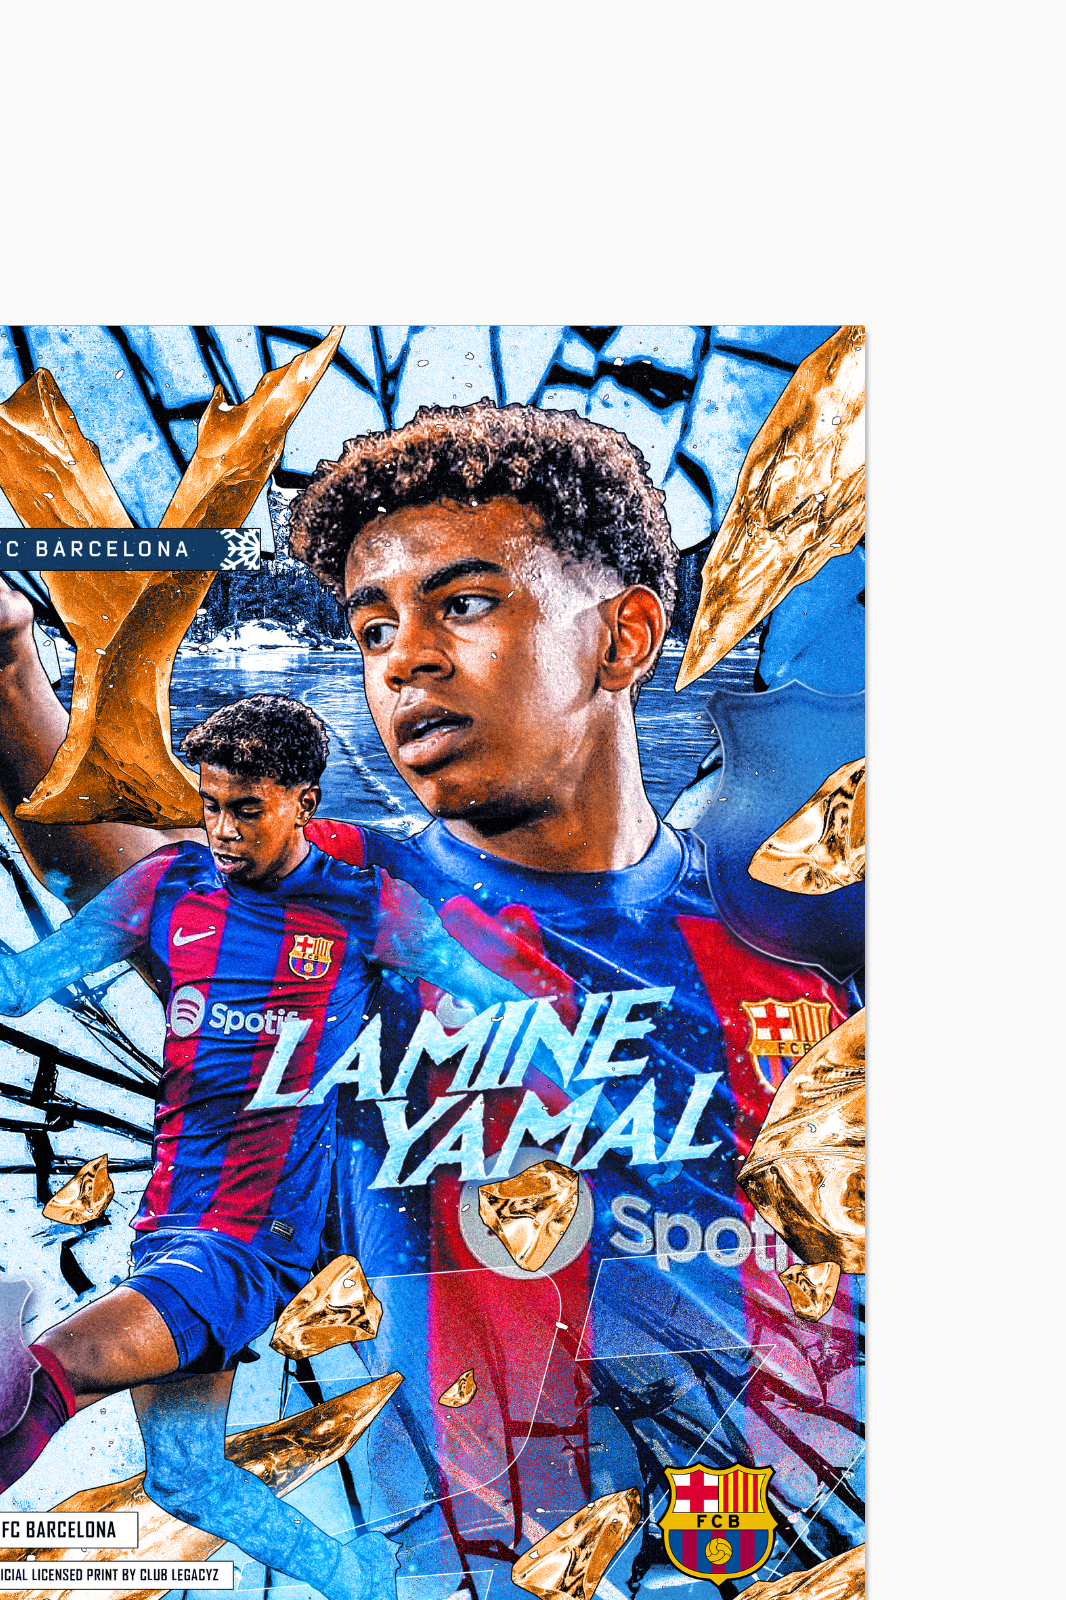 FC Barcelona - Poster Frozen Lamine Yamal 100 exemplaires